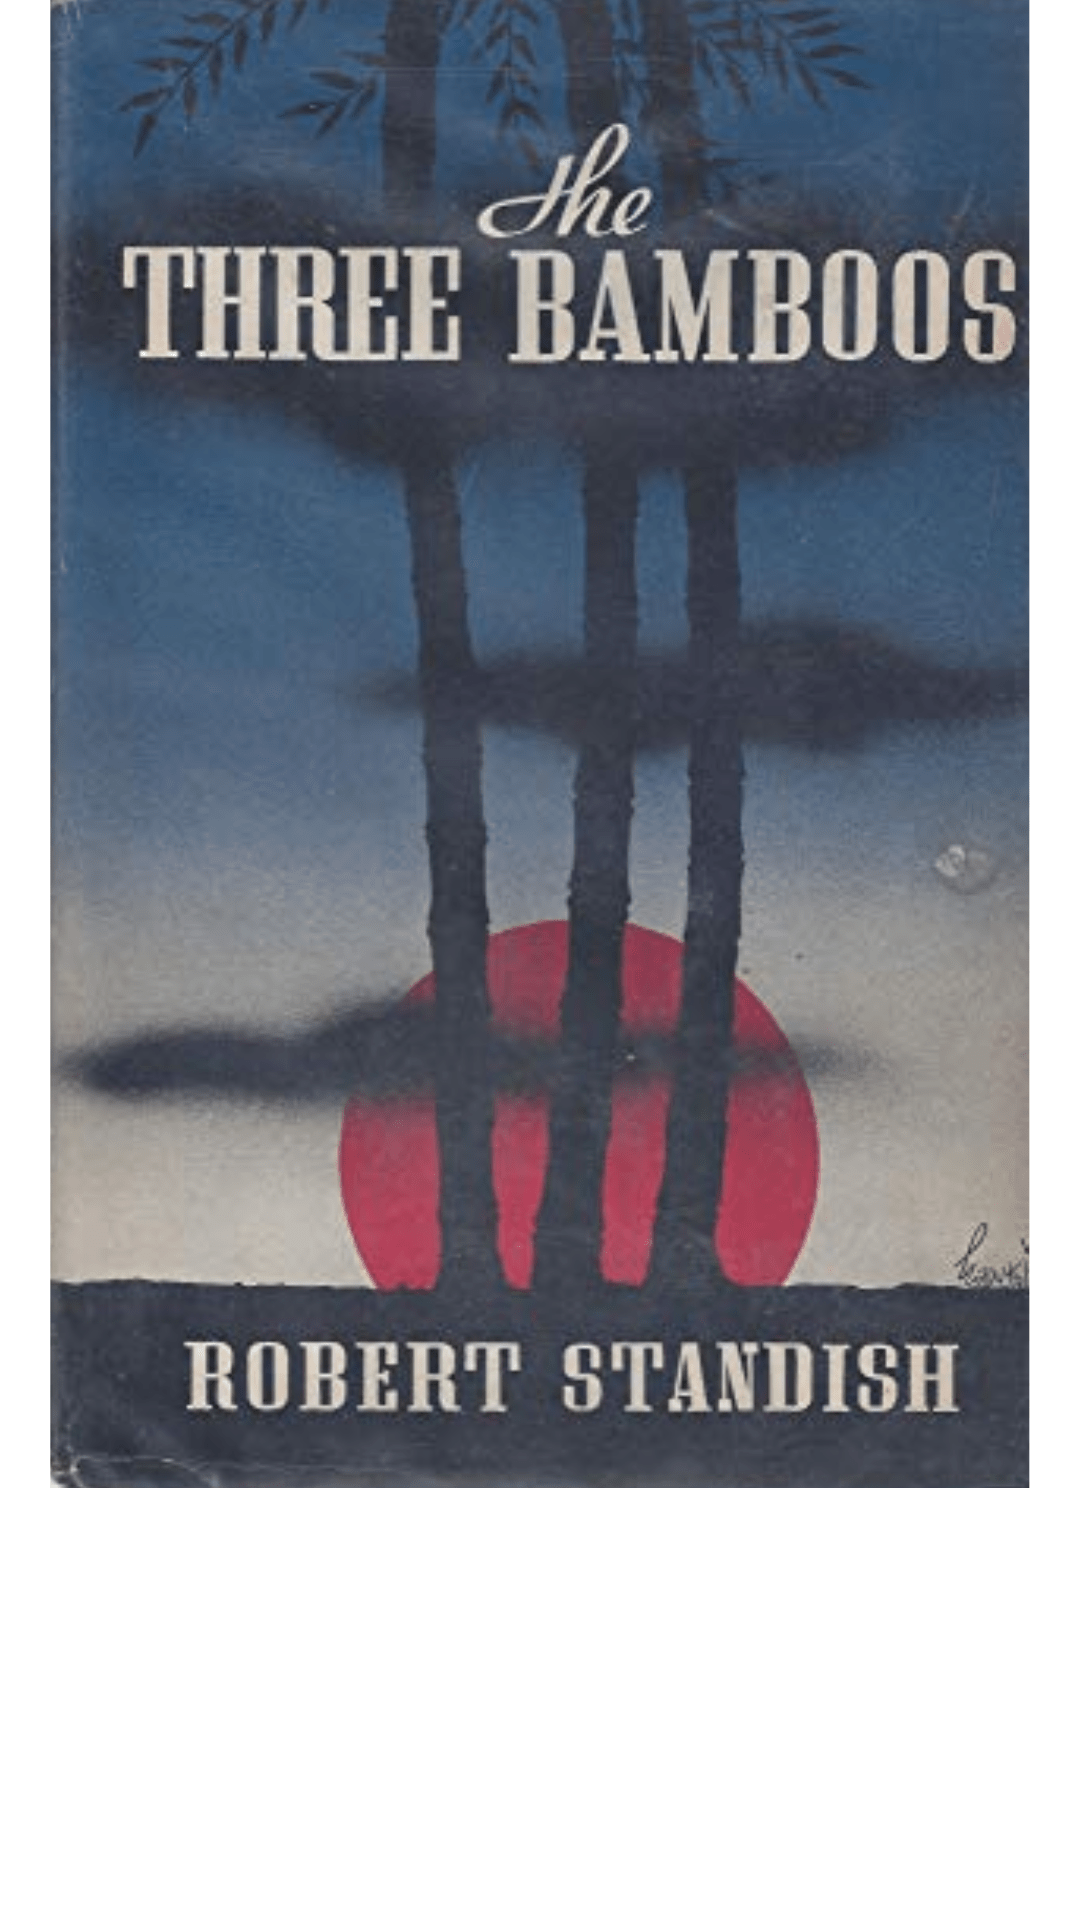 The Three Bamboos by Robert Standish